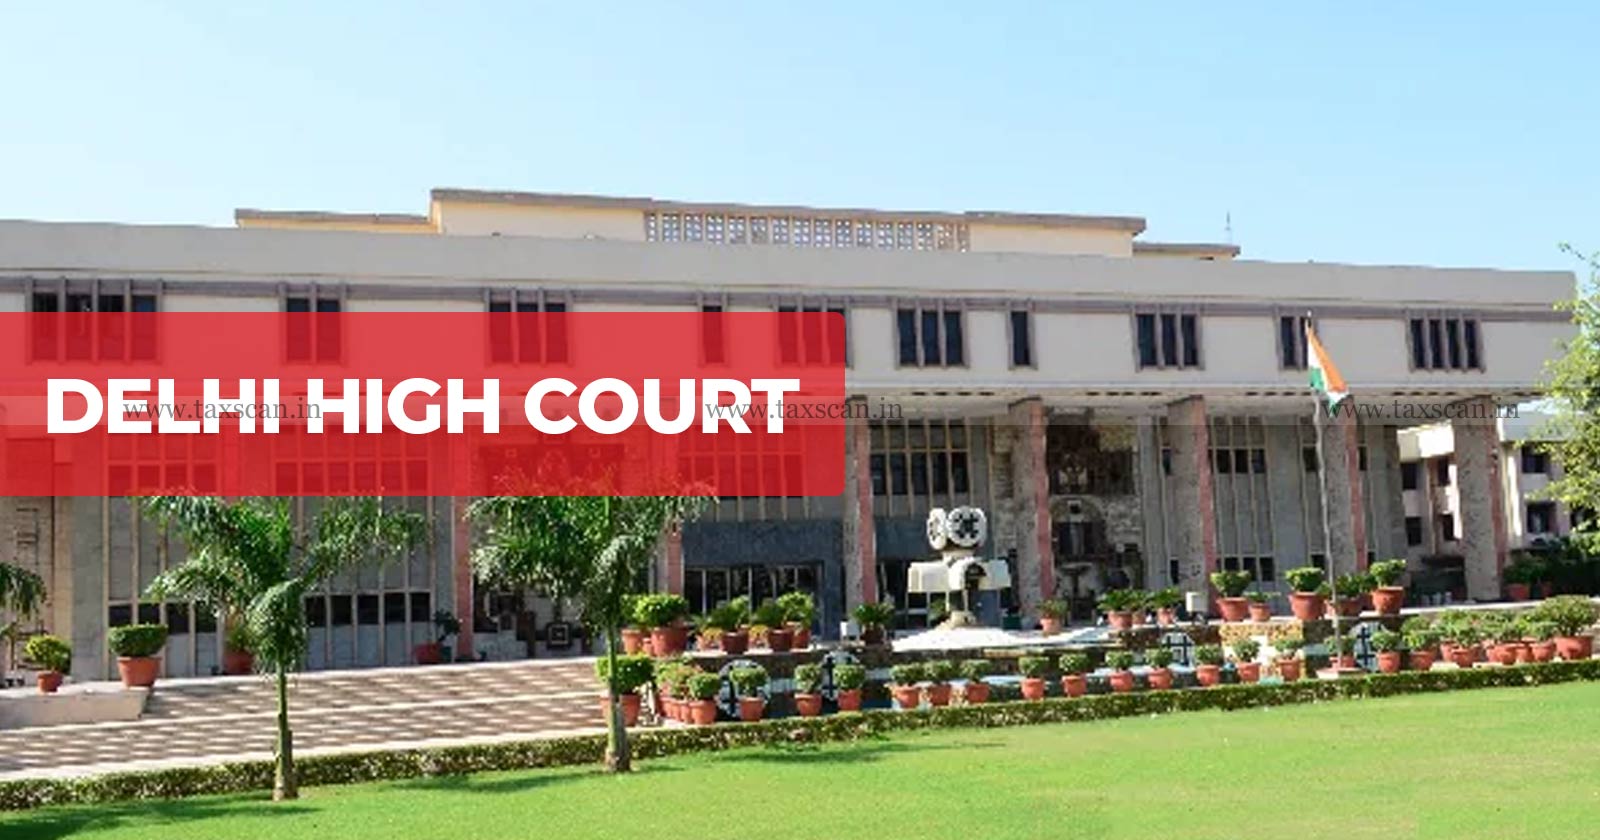 delhi high court - refund - Income Tax - Crystallized - taxscan